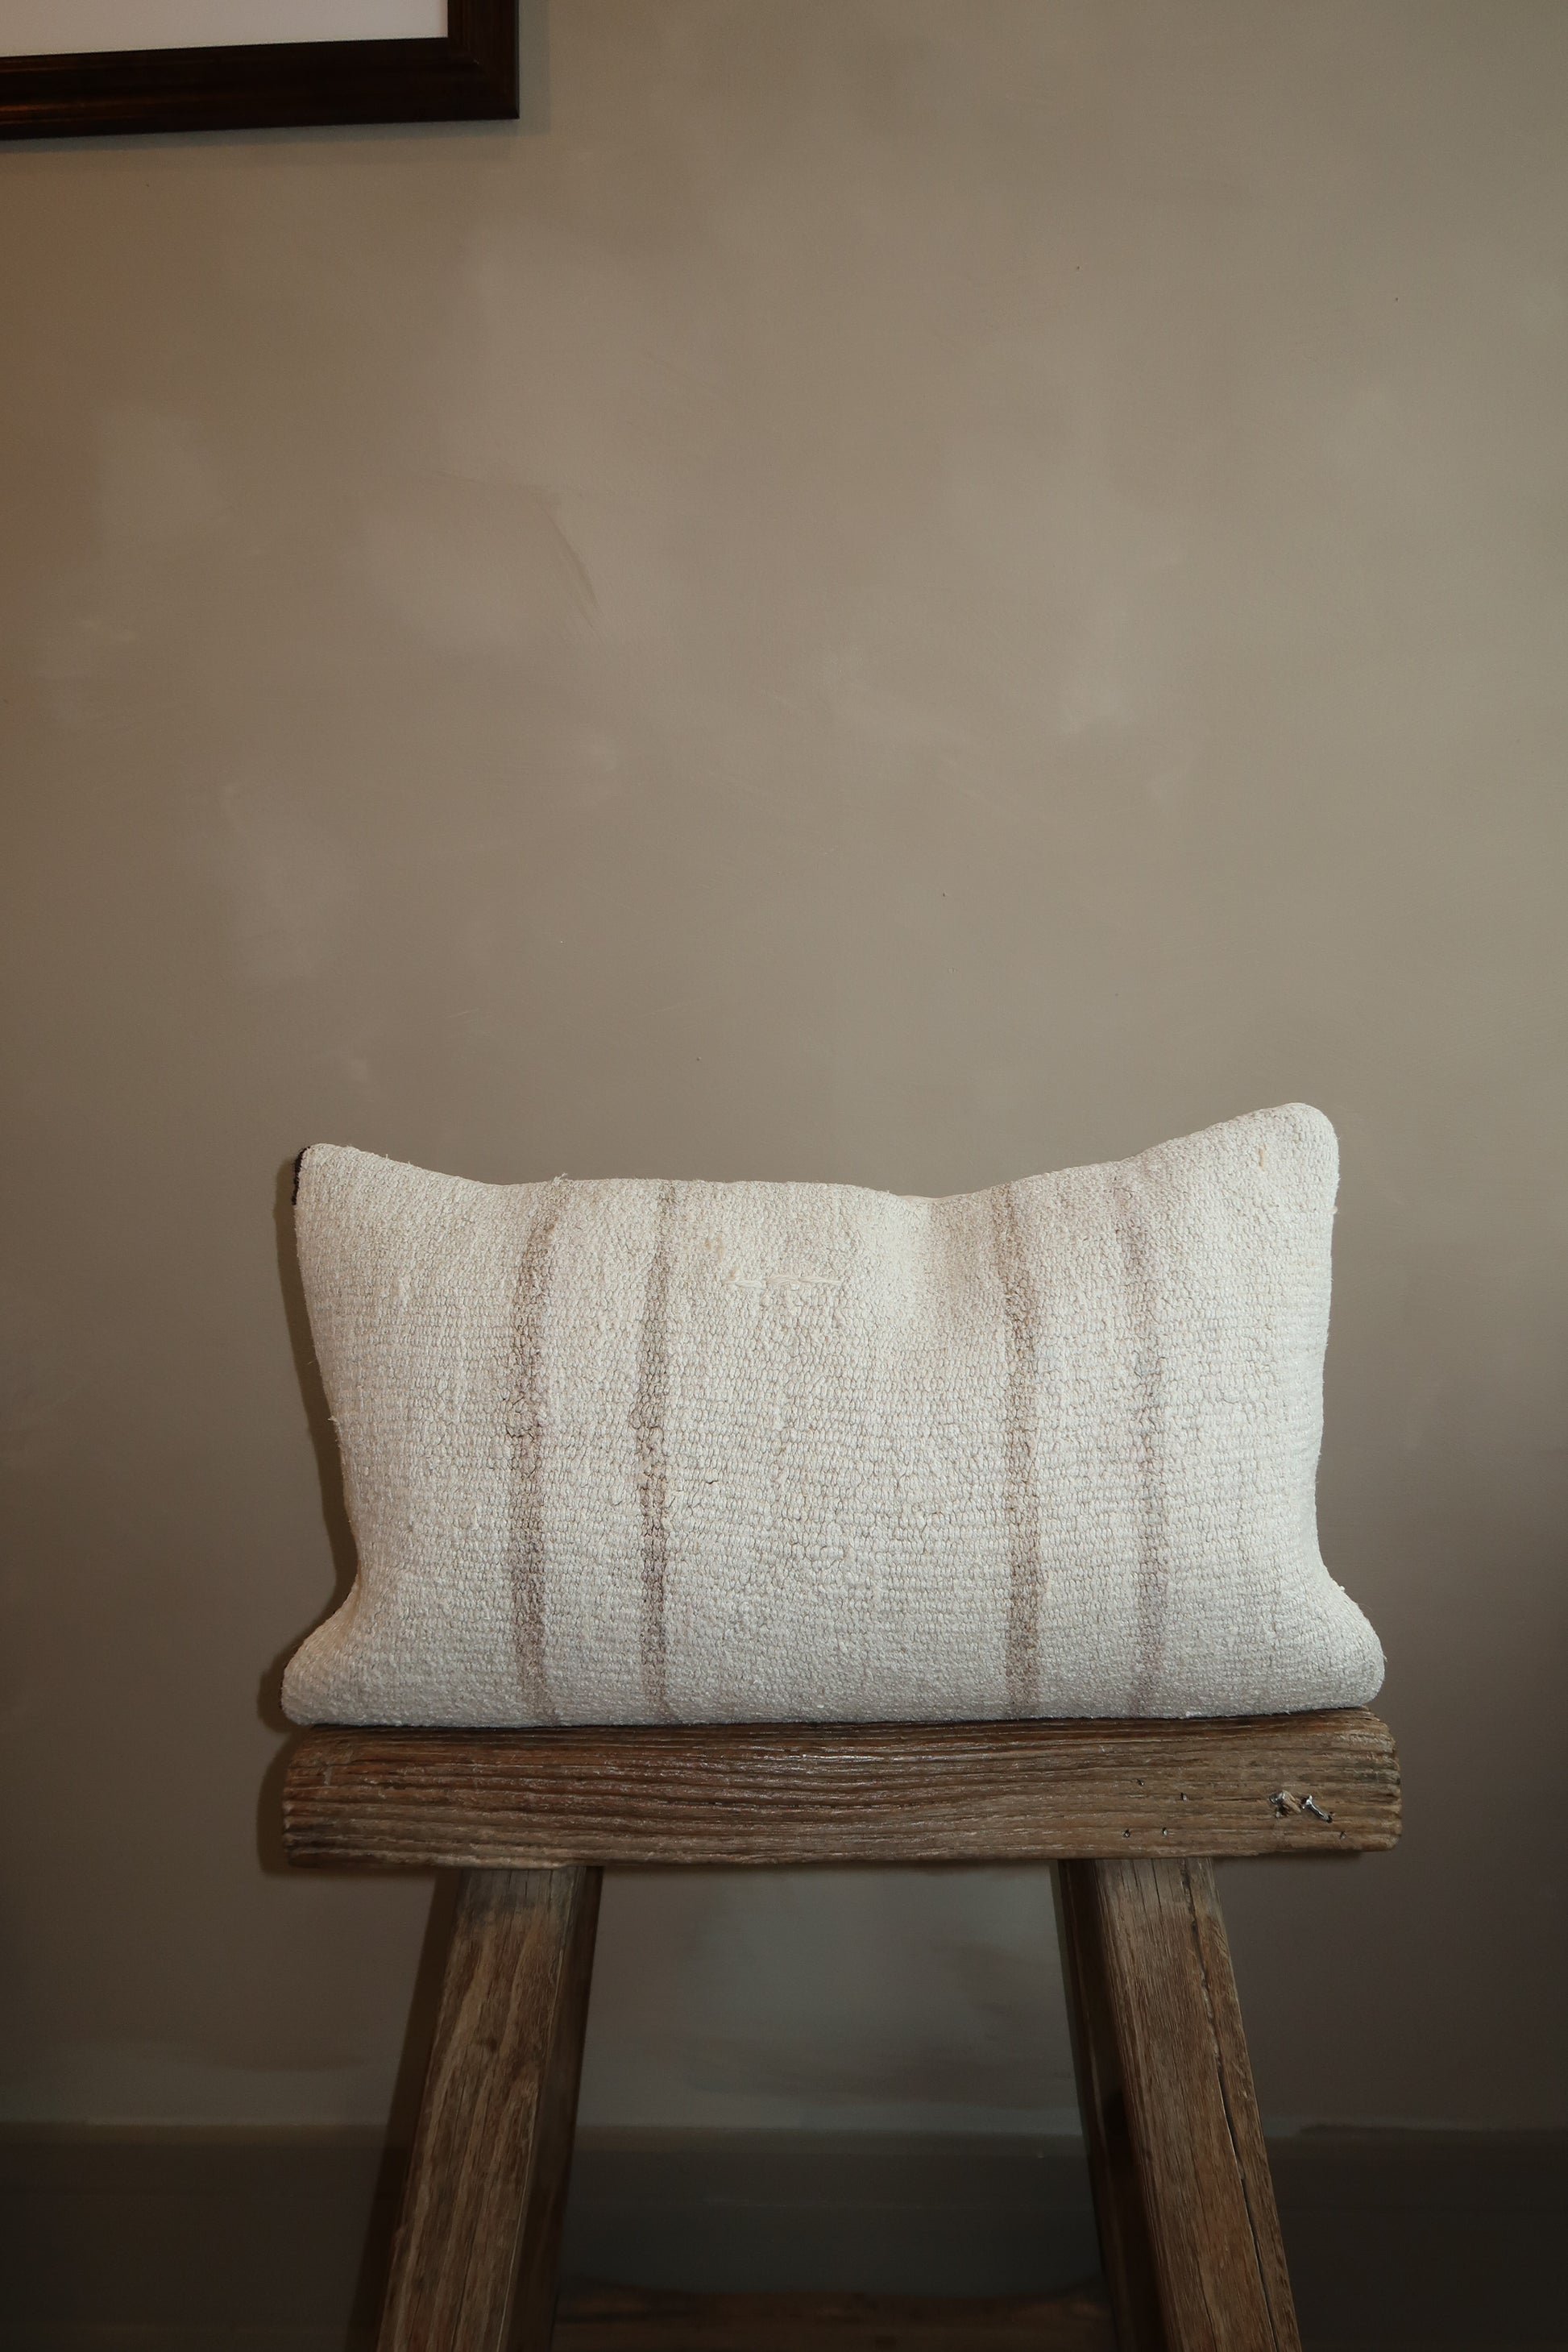 12x20 kilim lumbar pillow with stripes on top of stool